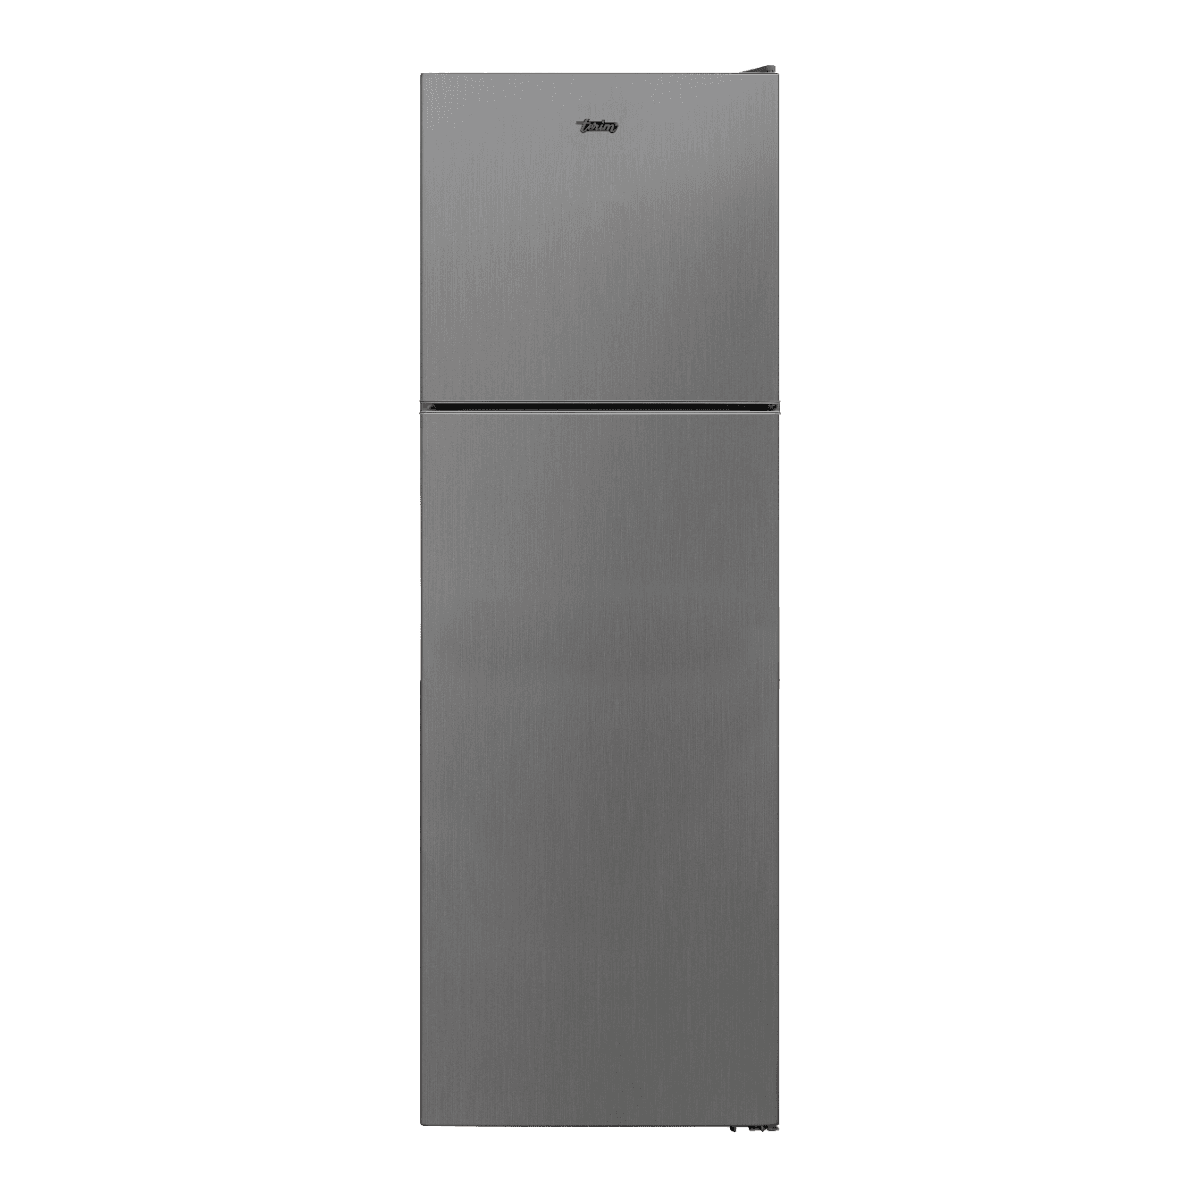 Terim Top Freezer Refrigerator, 440 L, TERR440VS